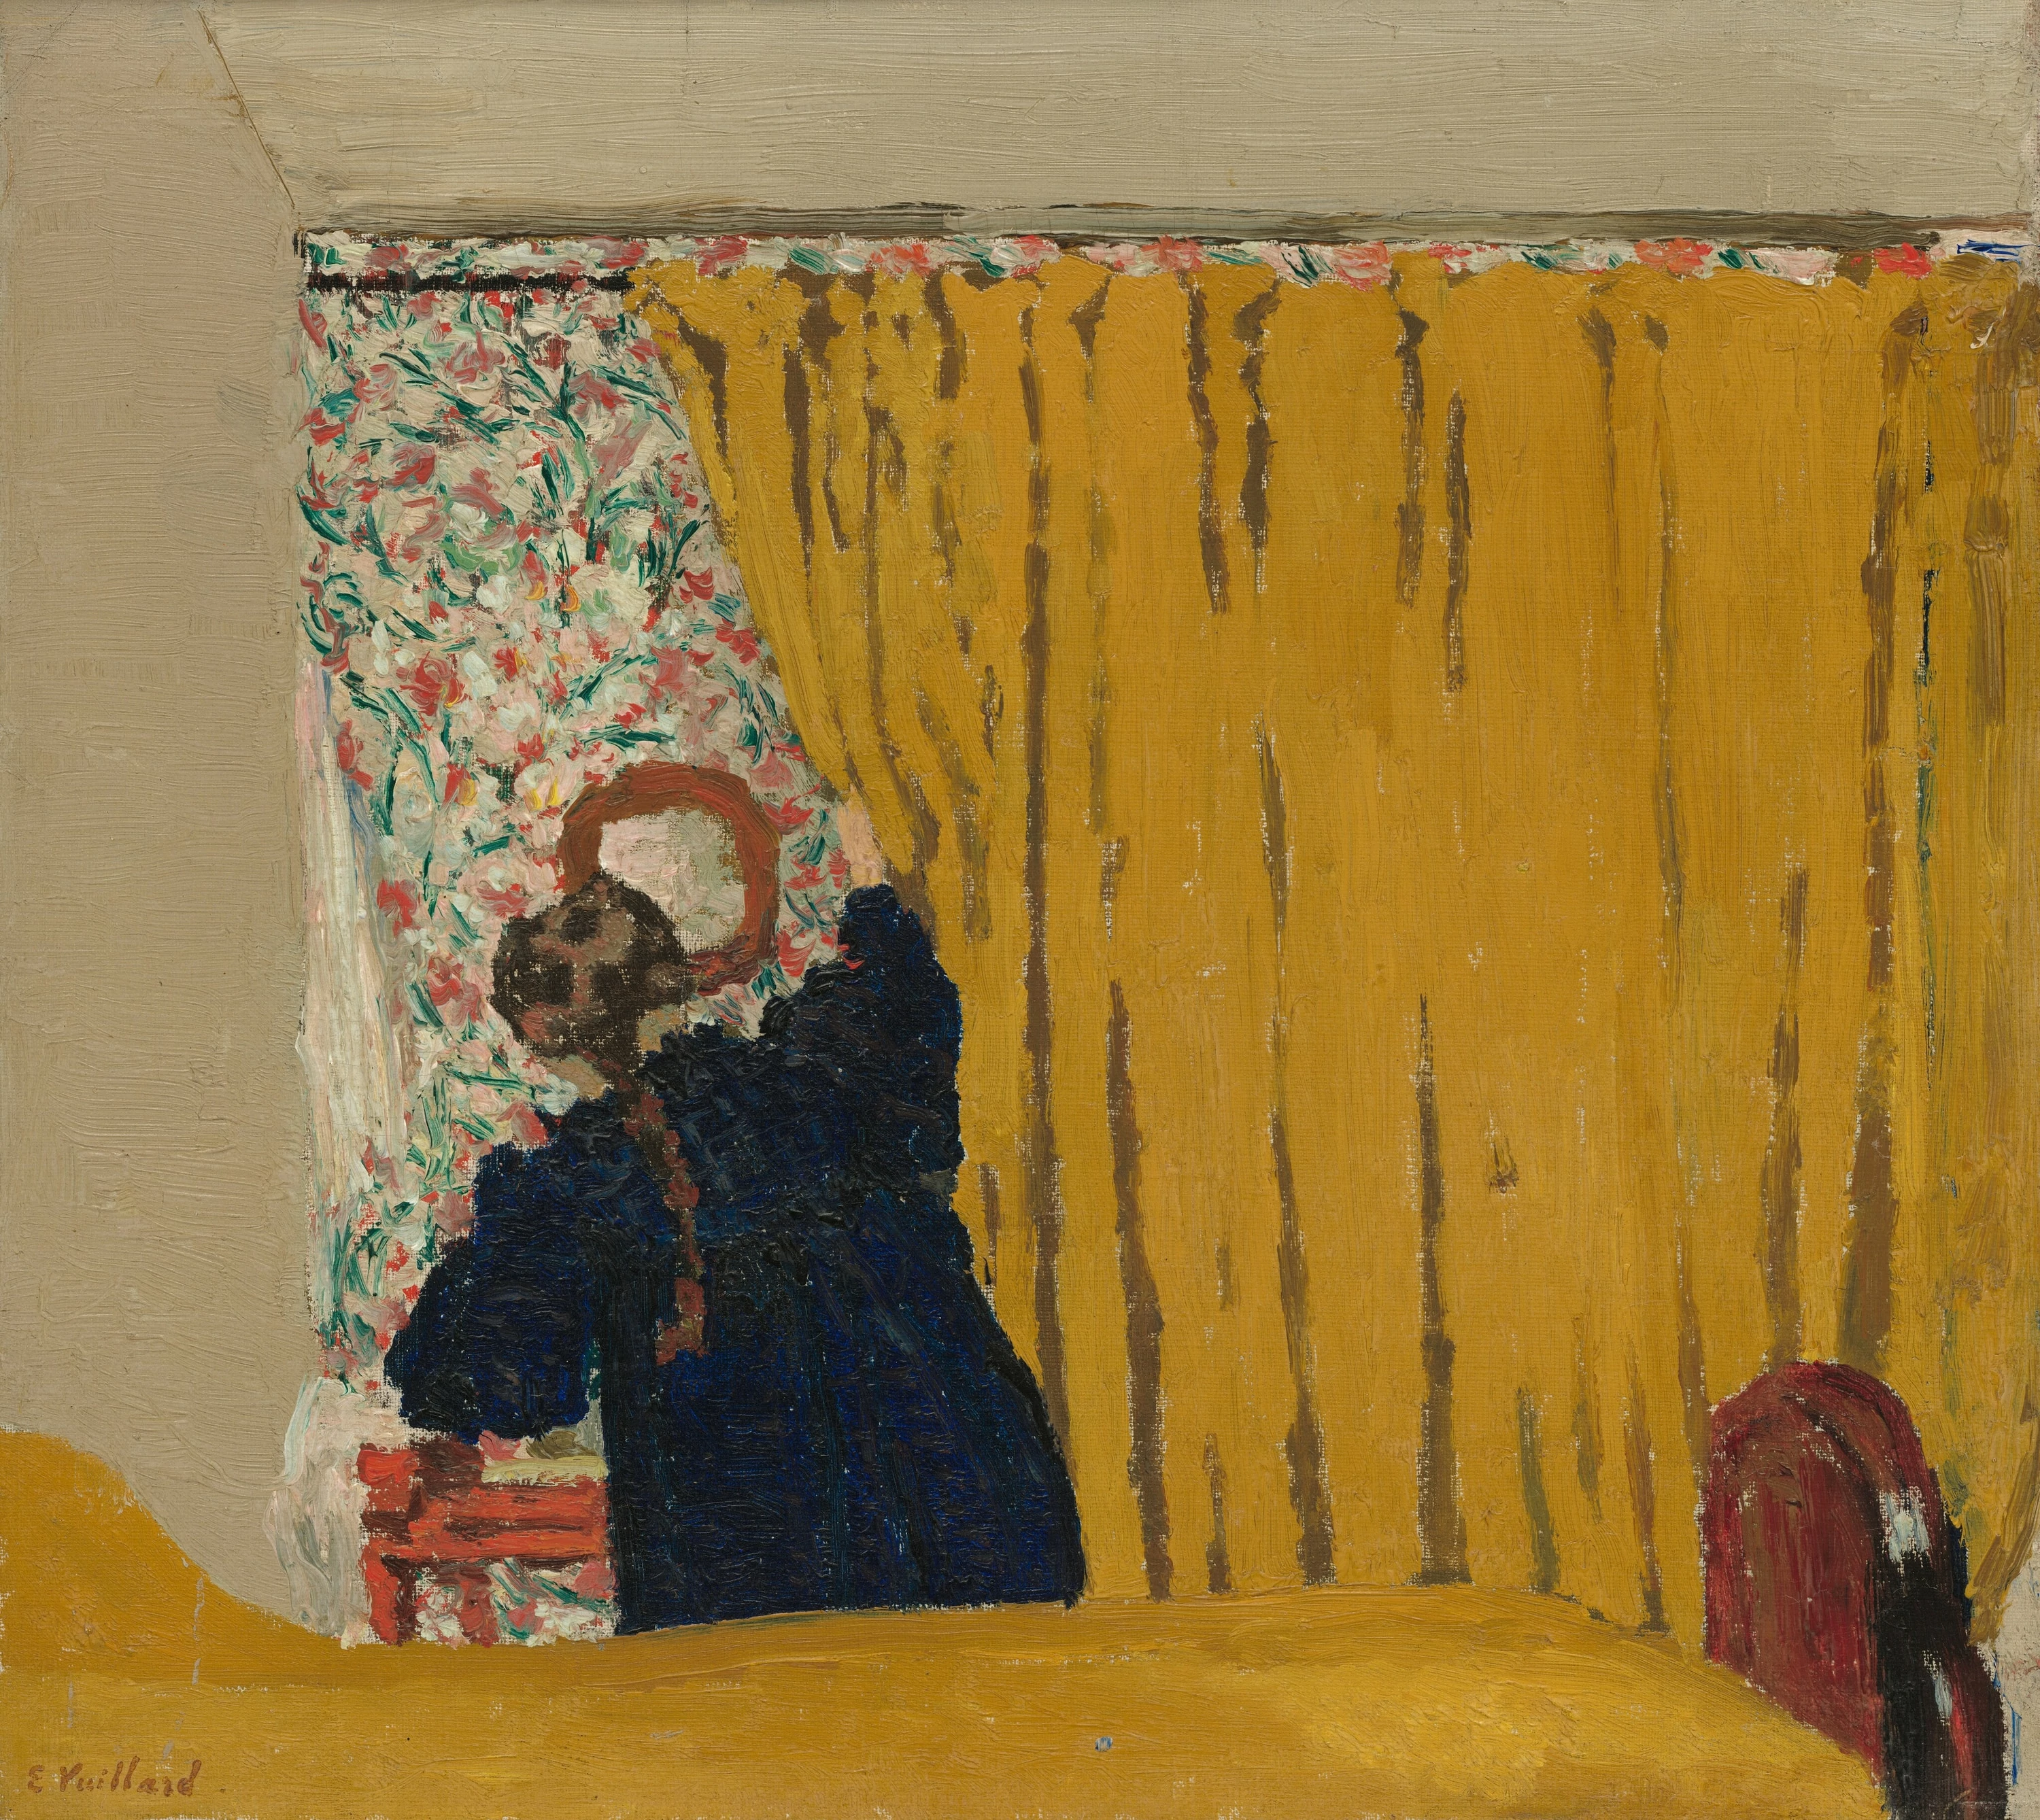 The Yellow Curtain, Édouard Vuillard